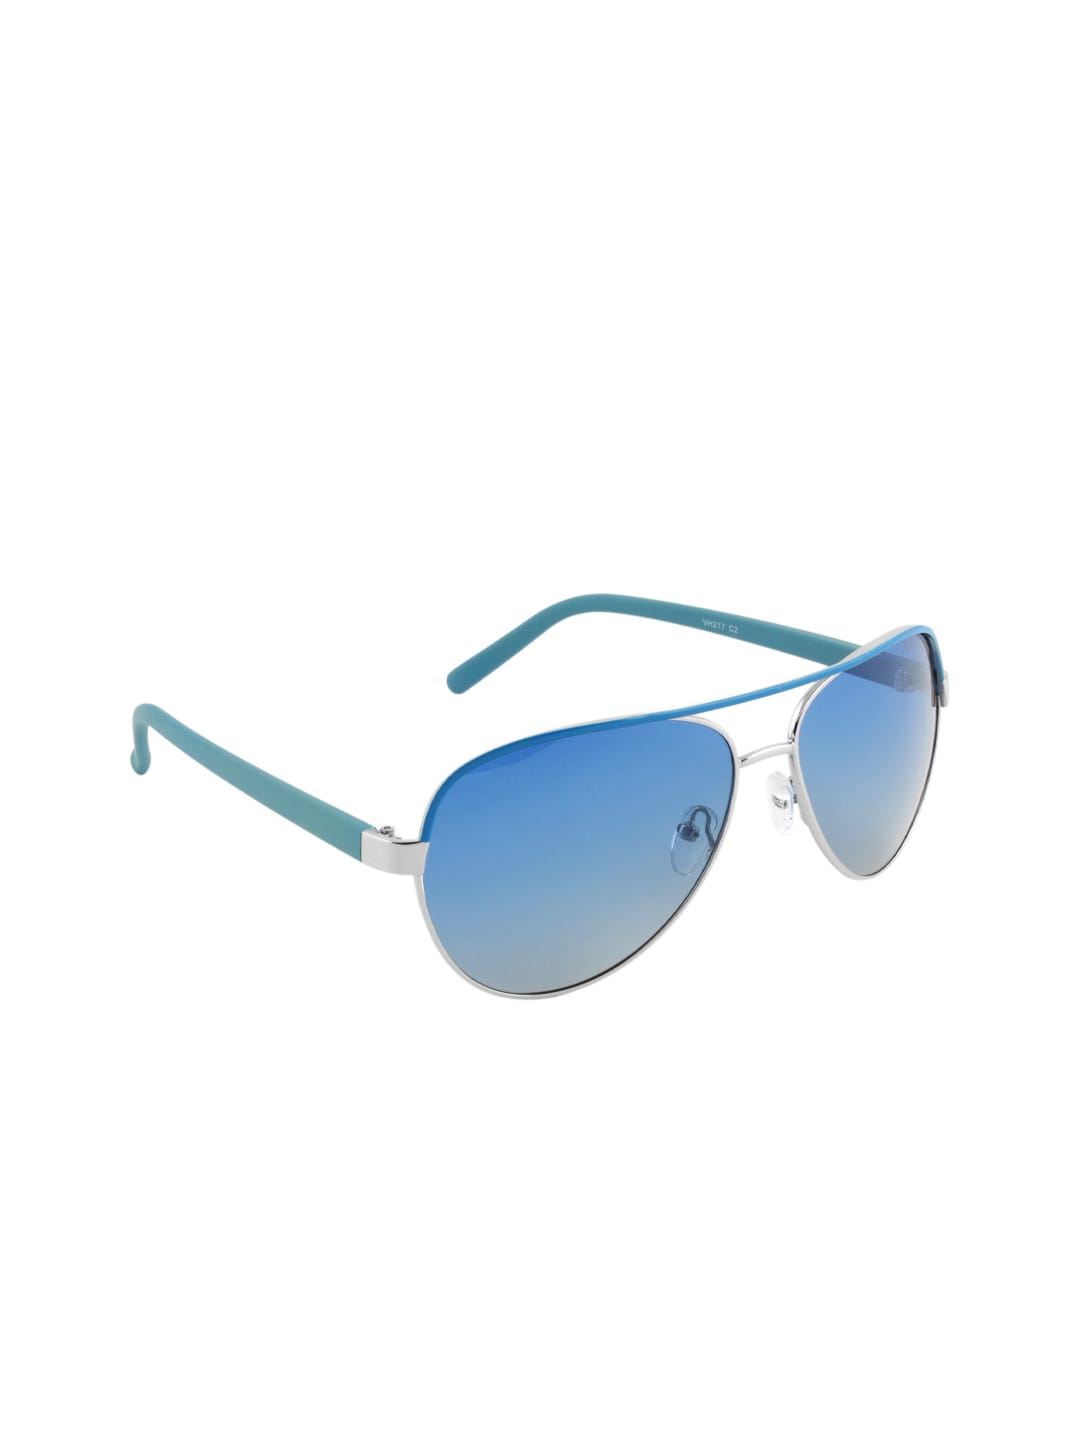 Van Heusen Unisex Blue Aviator Sunglasses VH217-C2